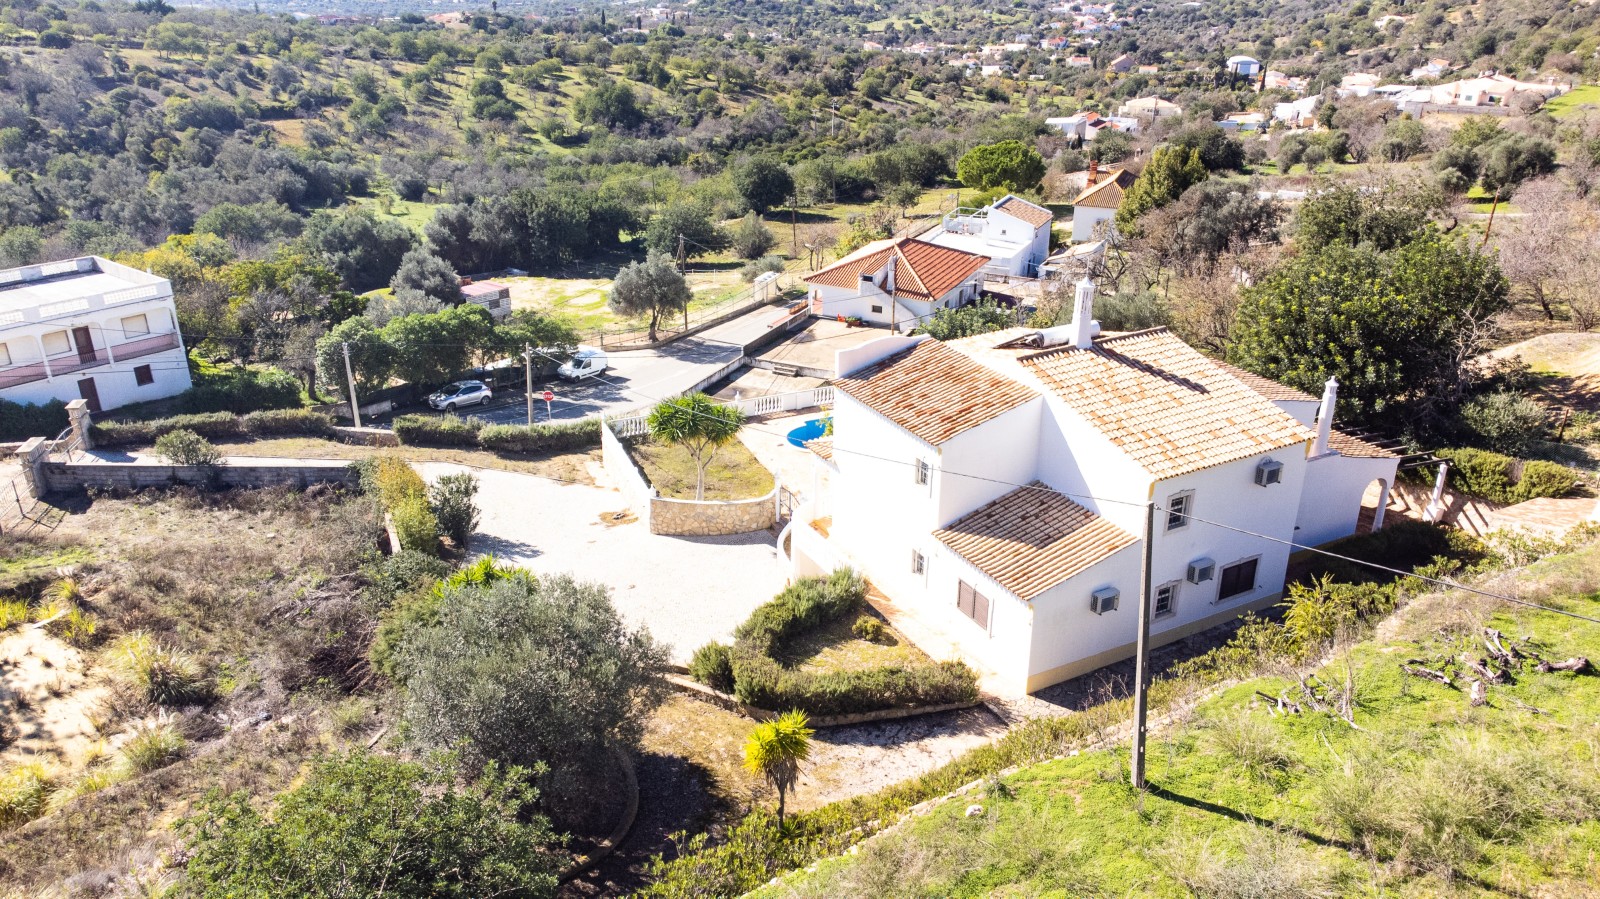 4-Bedroom Villa with swimming pool, for sale in Boliqueime, Loulé, Algarve_267418